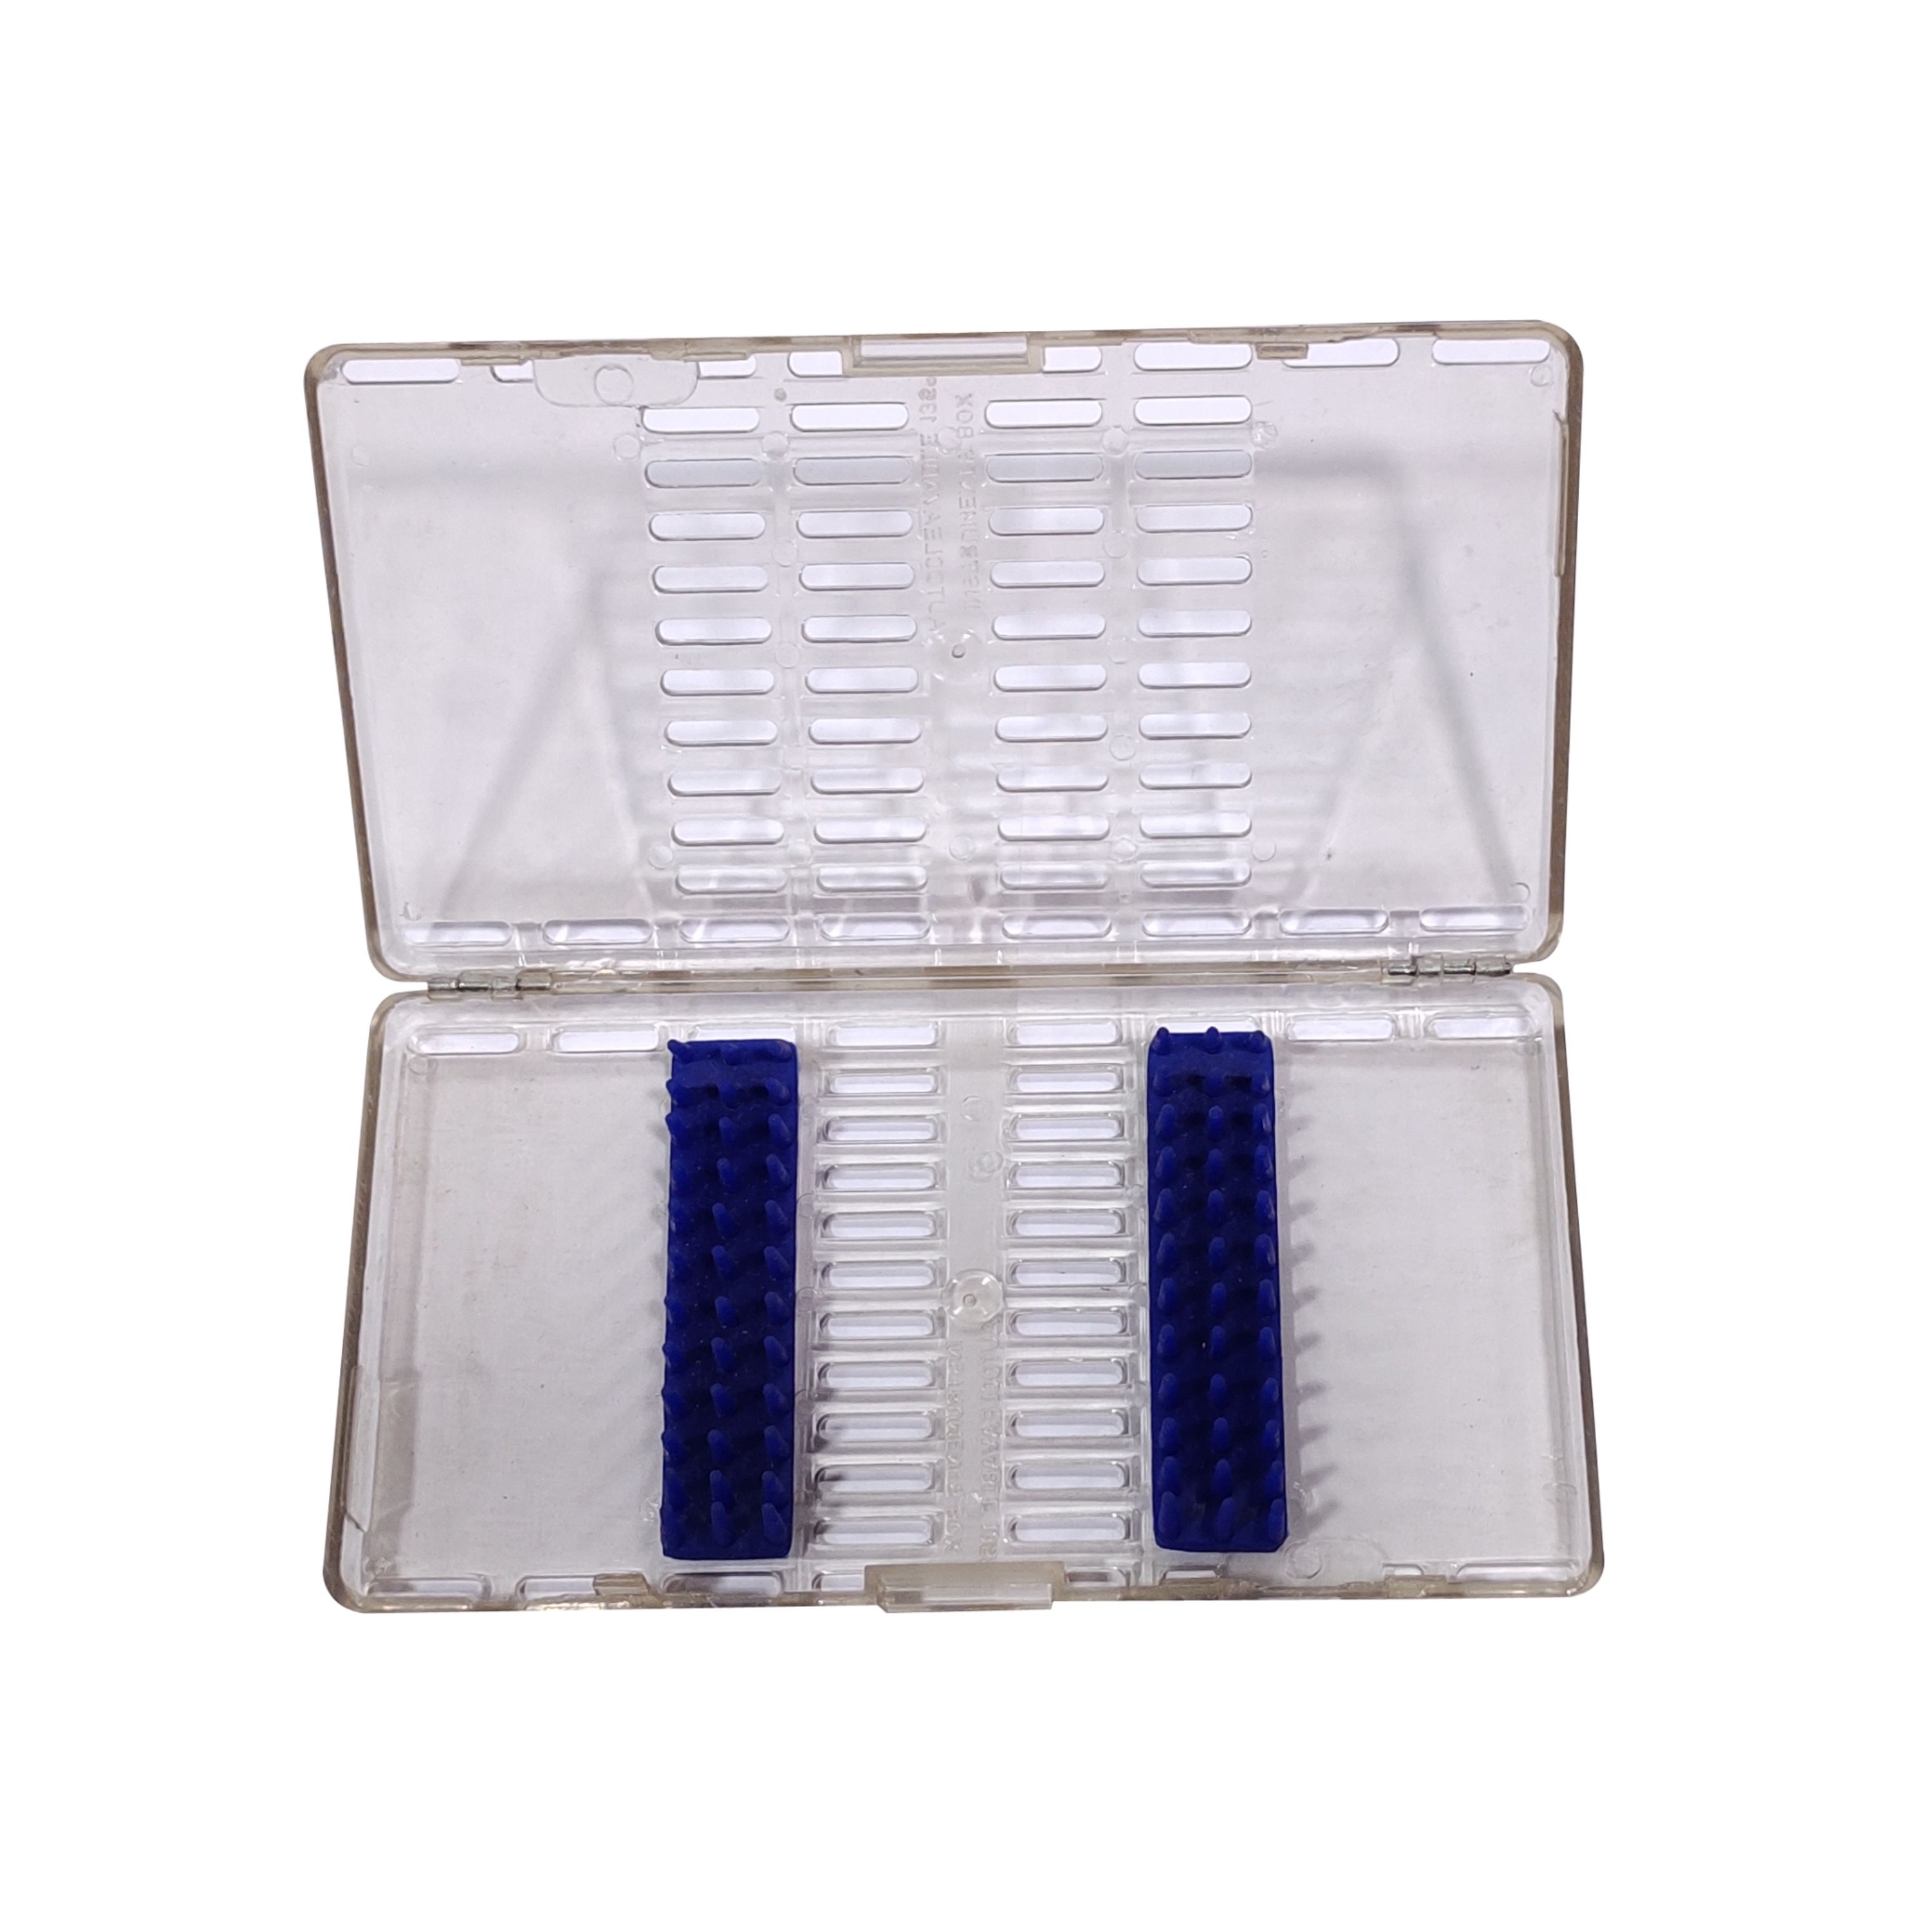 Trust & Care Plastic Instrument Sterilization Cassette For 10-Inst.